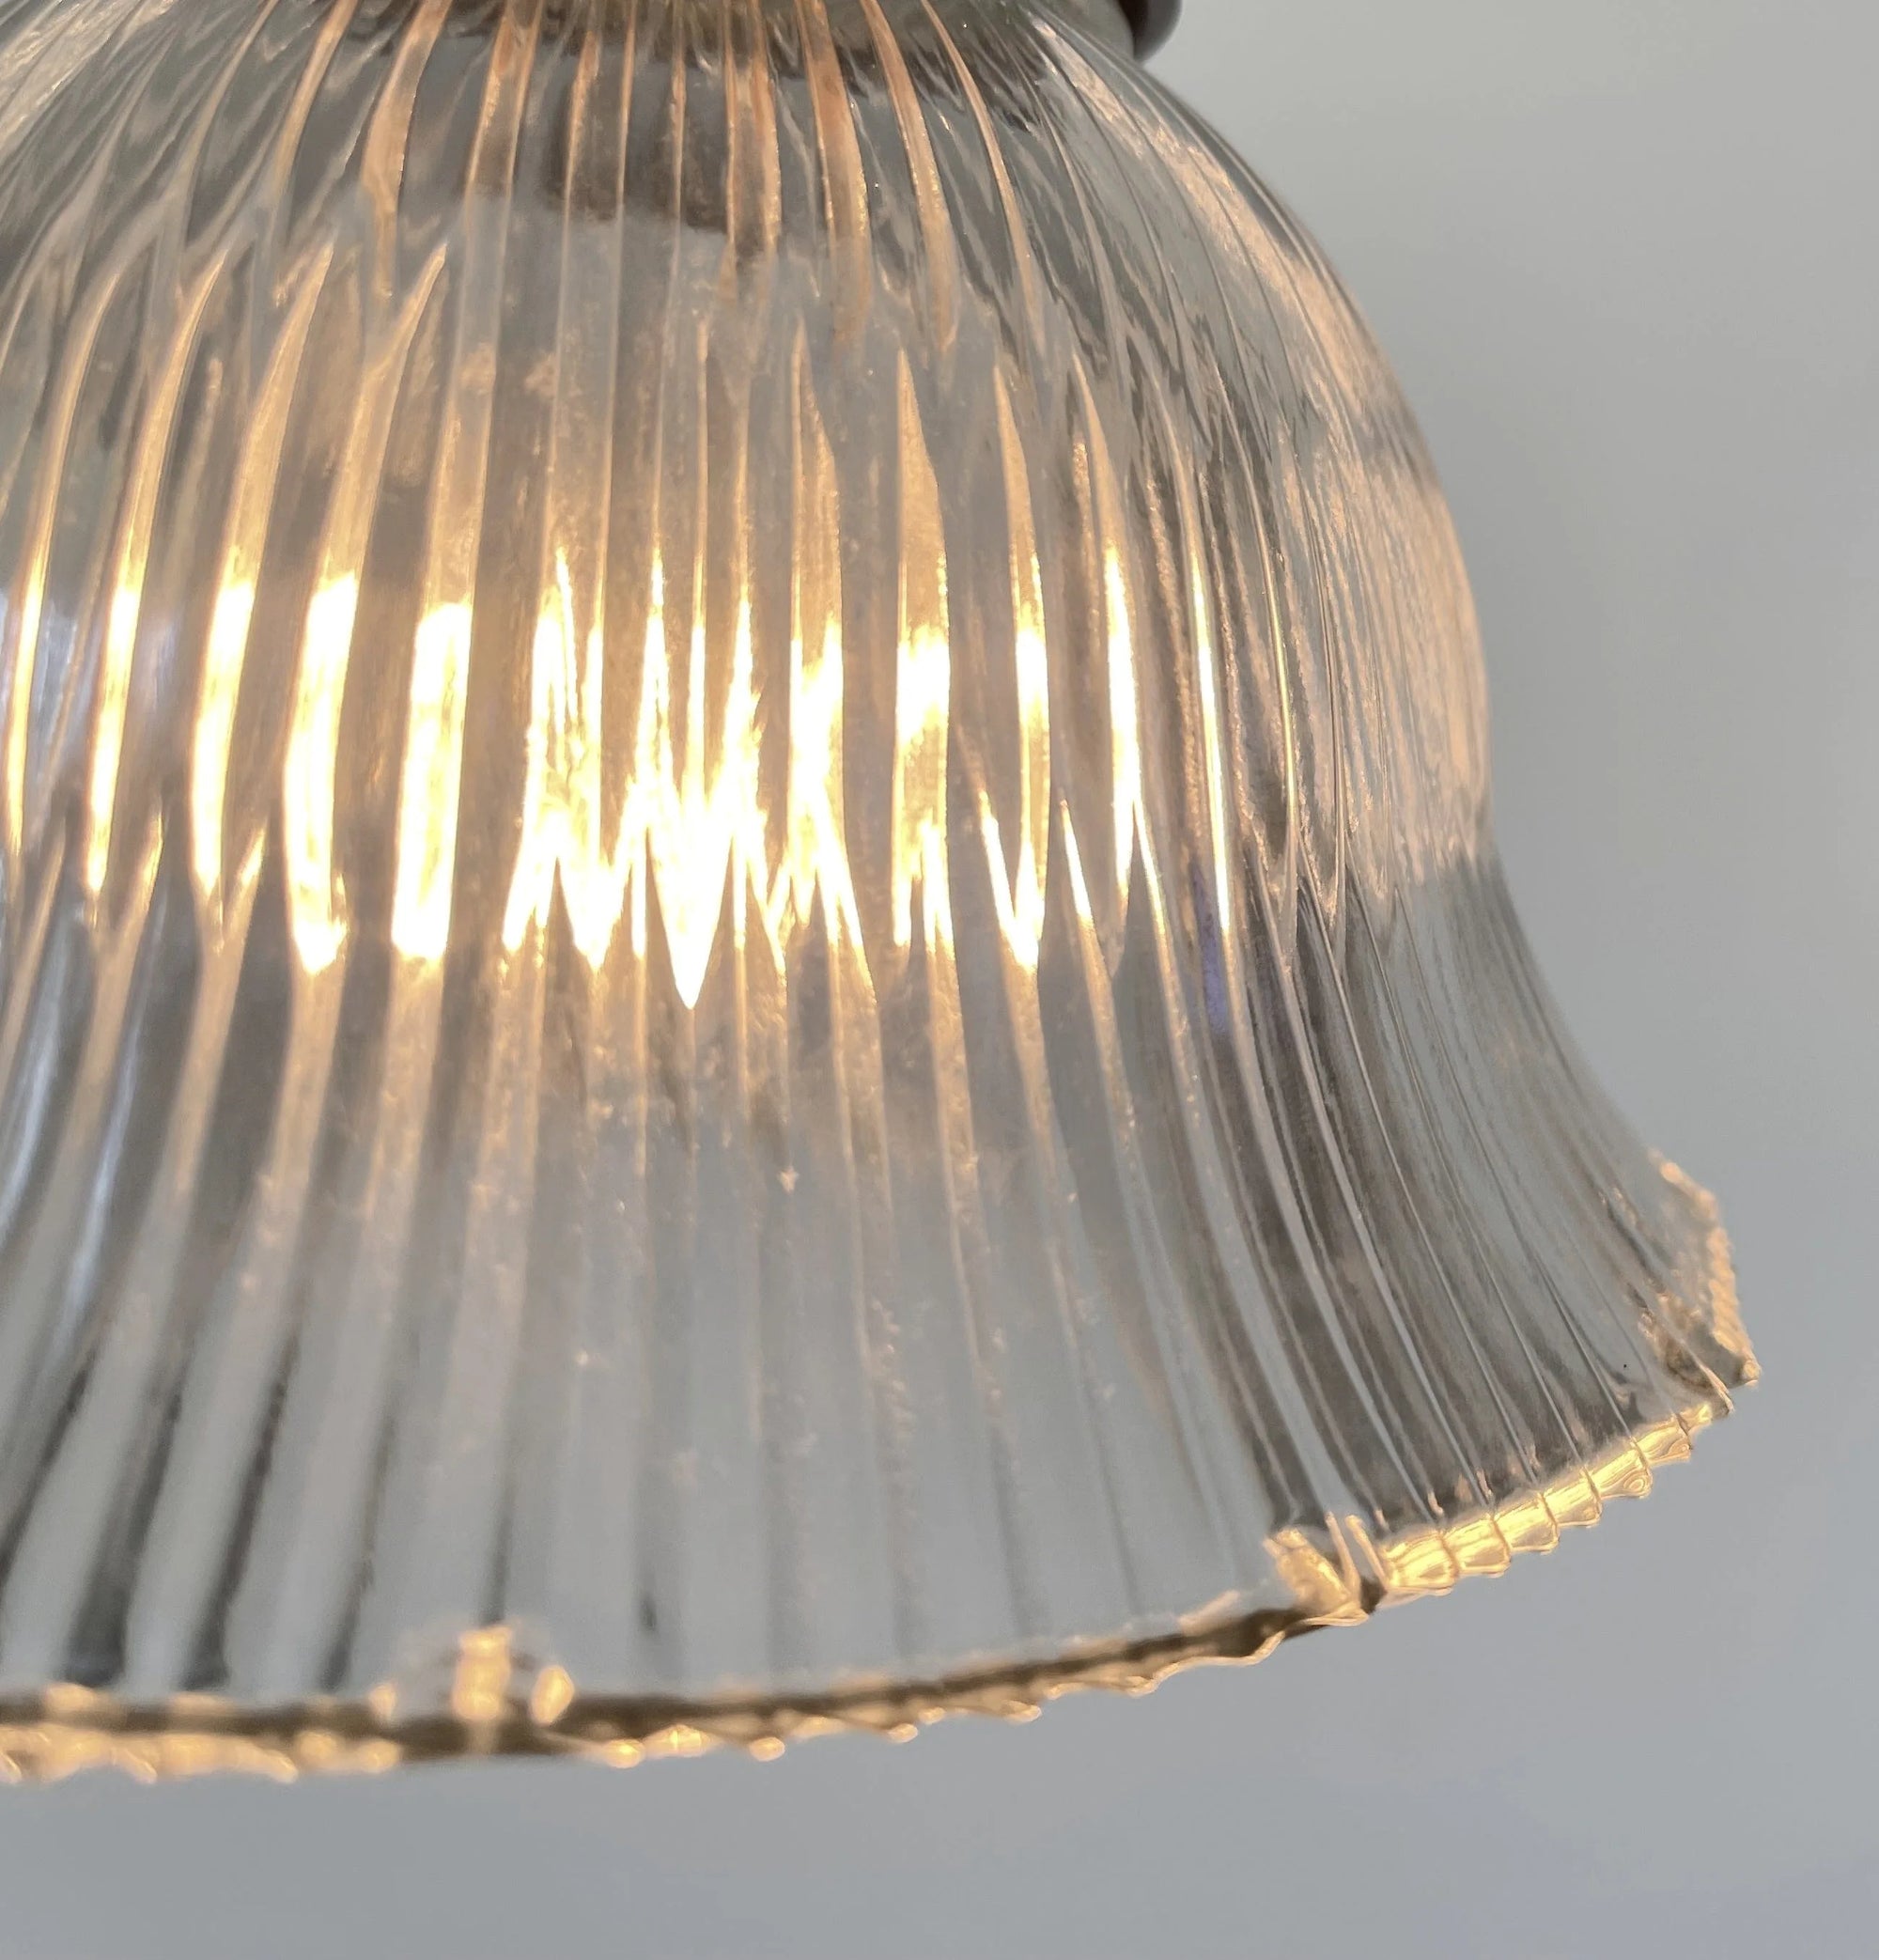 New Dome Holophane Pendant Light The Lamp Goods